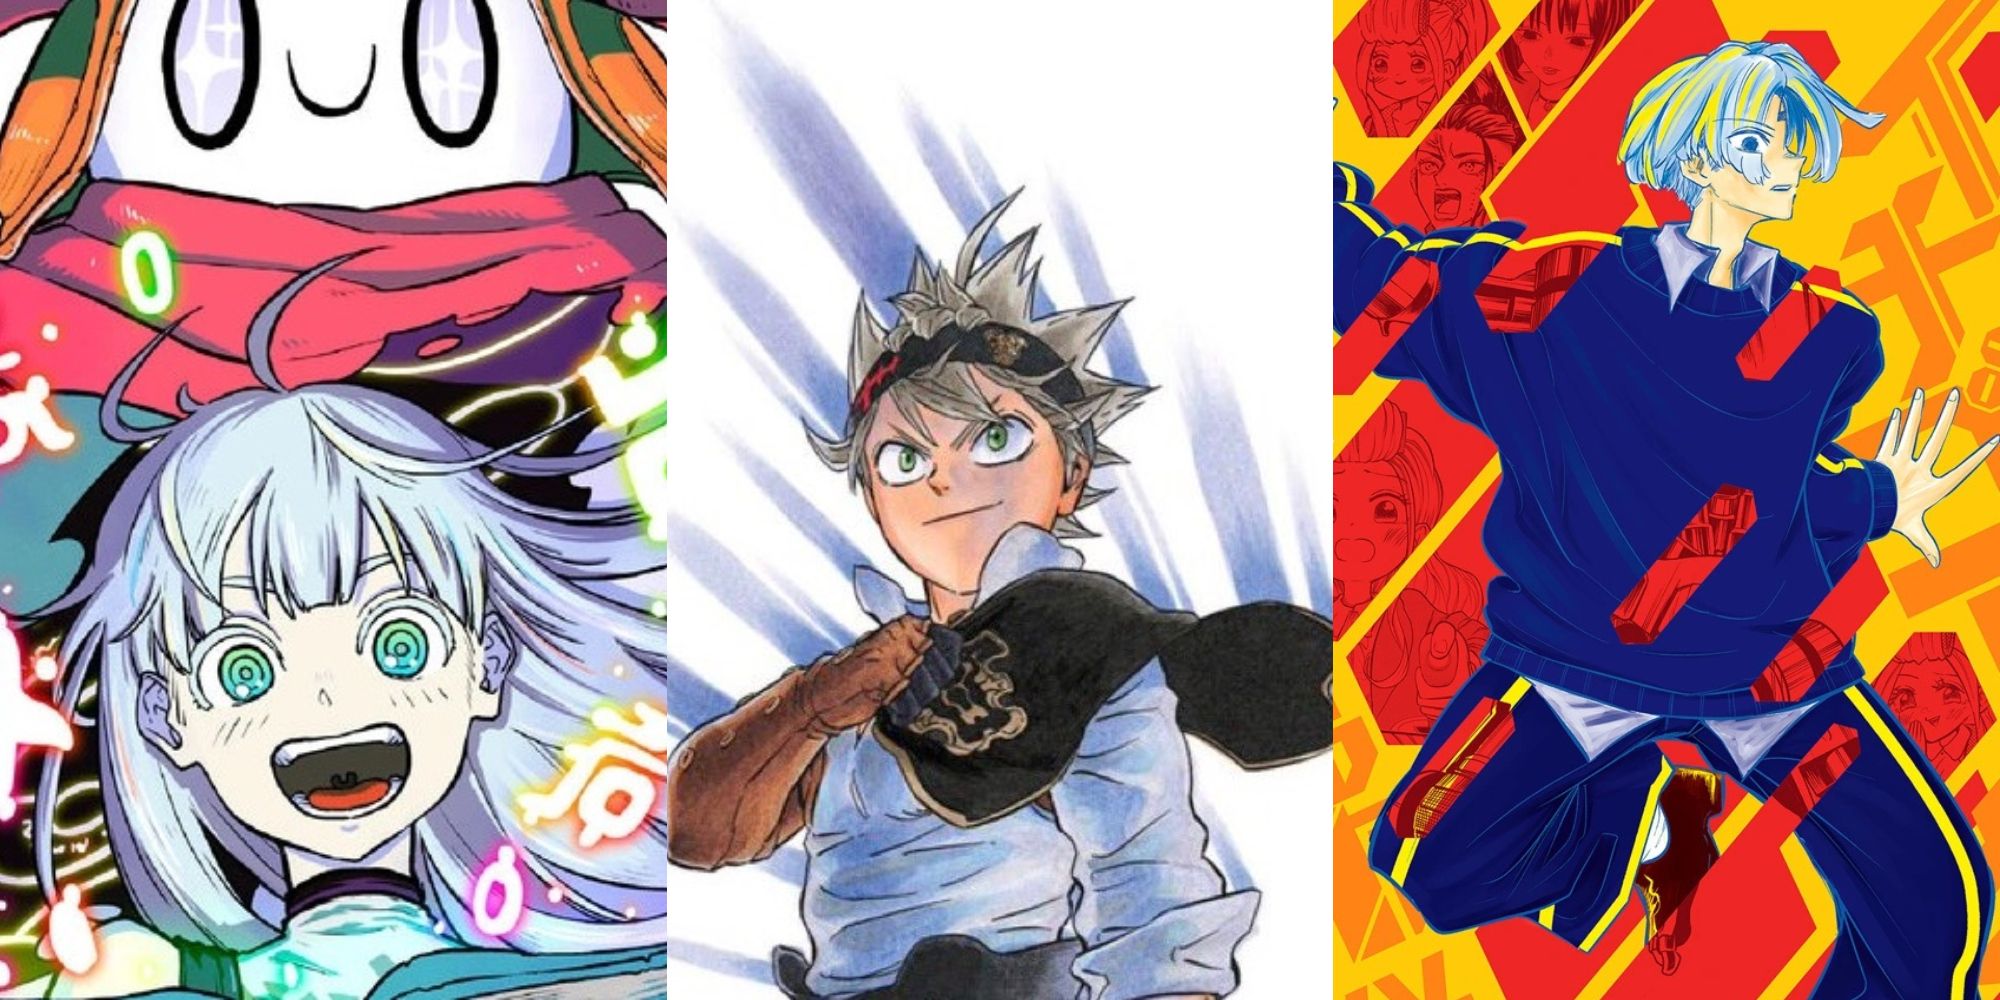 Ginka & Gluna Black Clover Ichigokis Under Control on a collage-style banner showing off their different art styles.